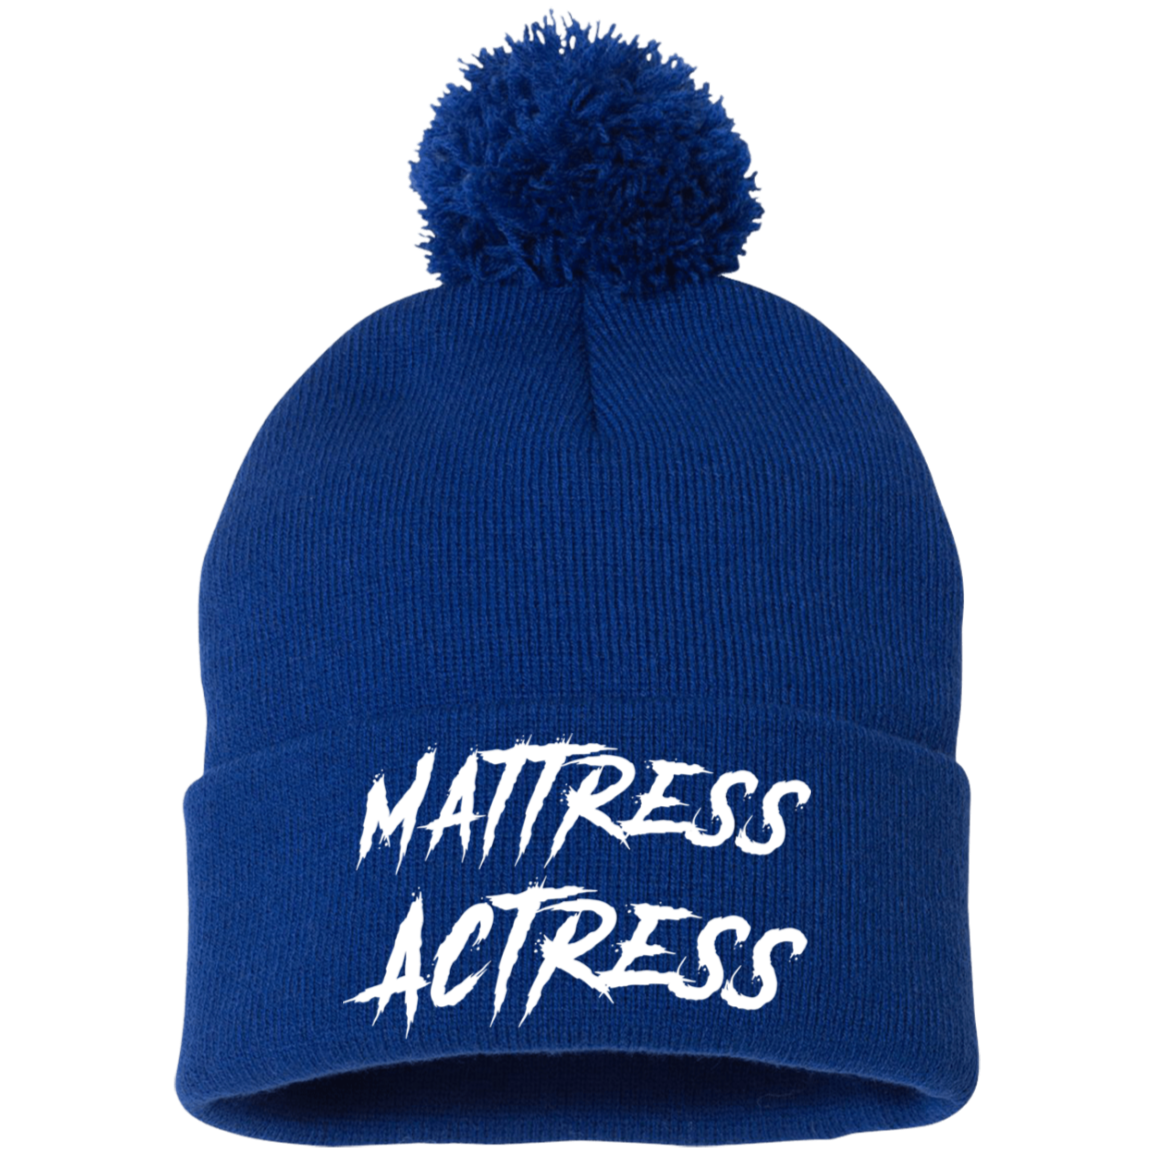 "Mattress Actress" Embroidered Pom Pom Knit Cap